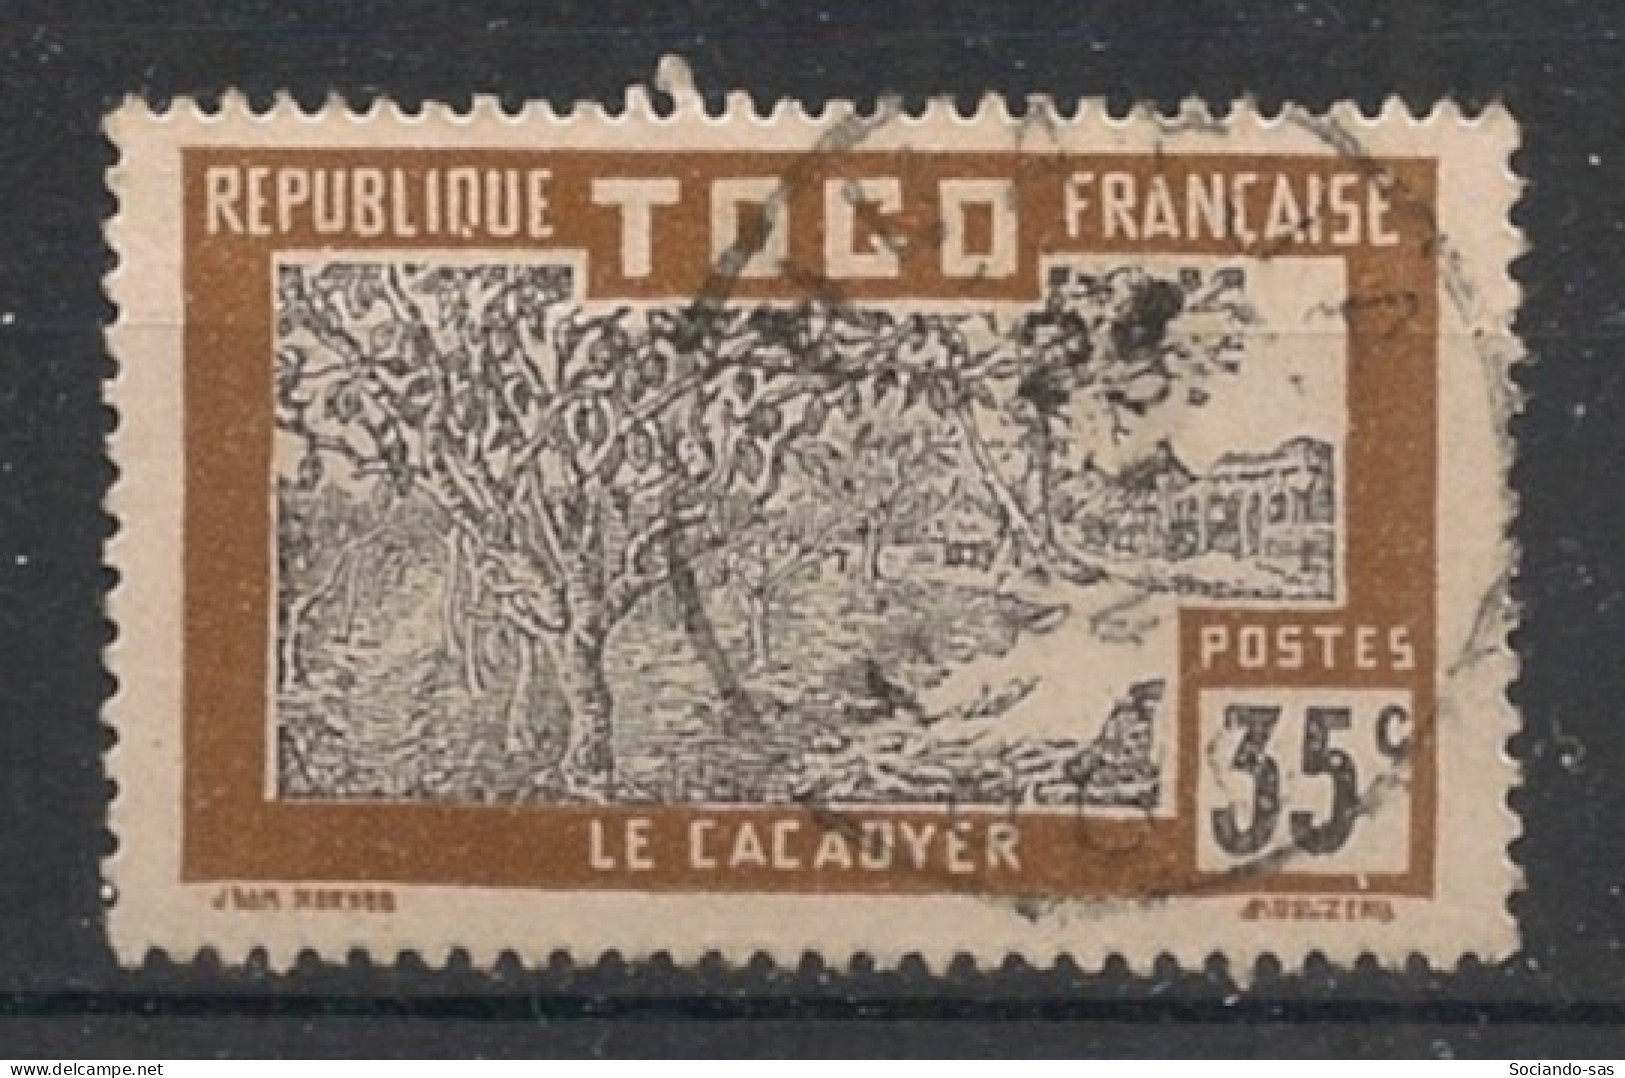 TOGO - 1924 - N°YT. 133 - Cacaoyer 35c Brun - Oblitéré / Used - Oblitérés